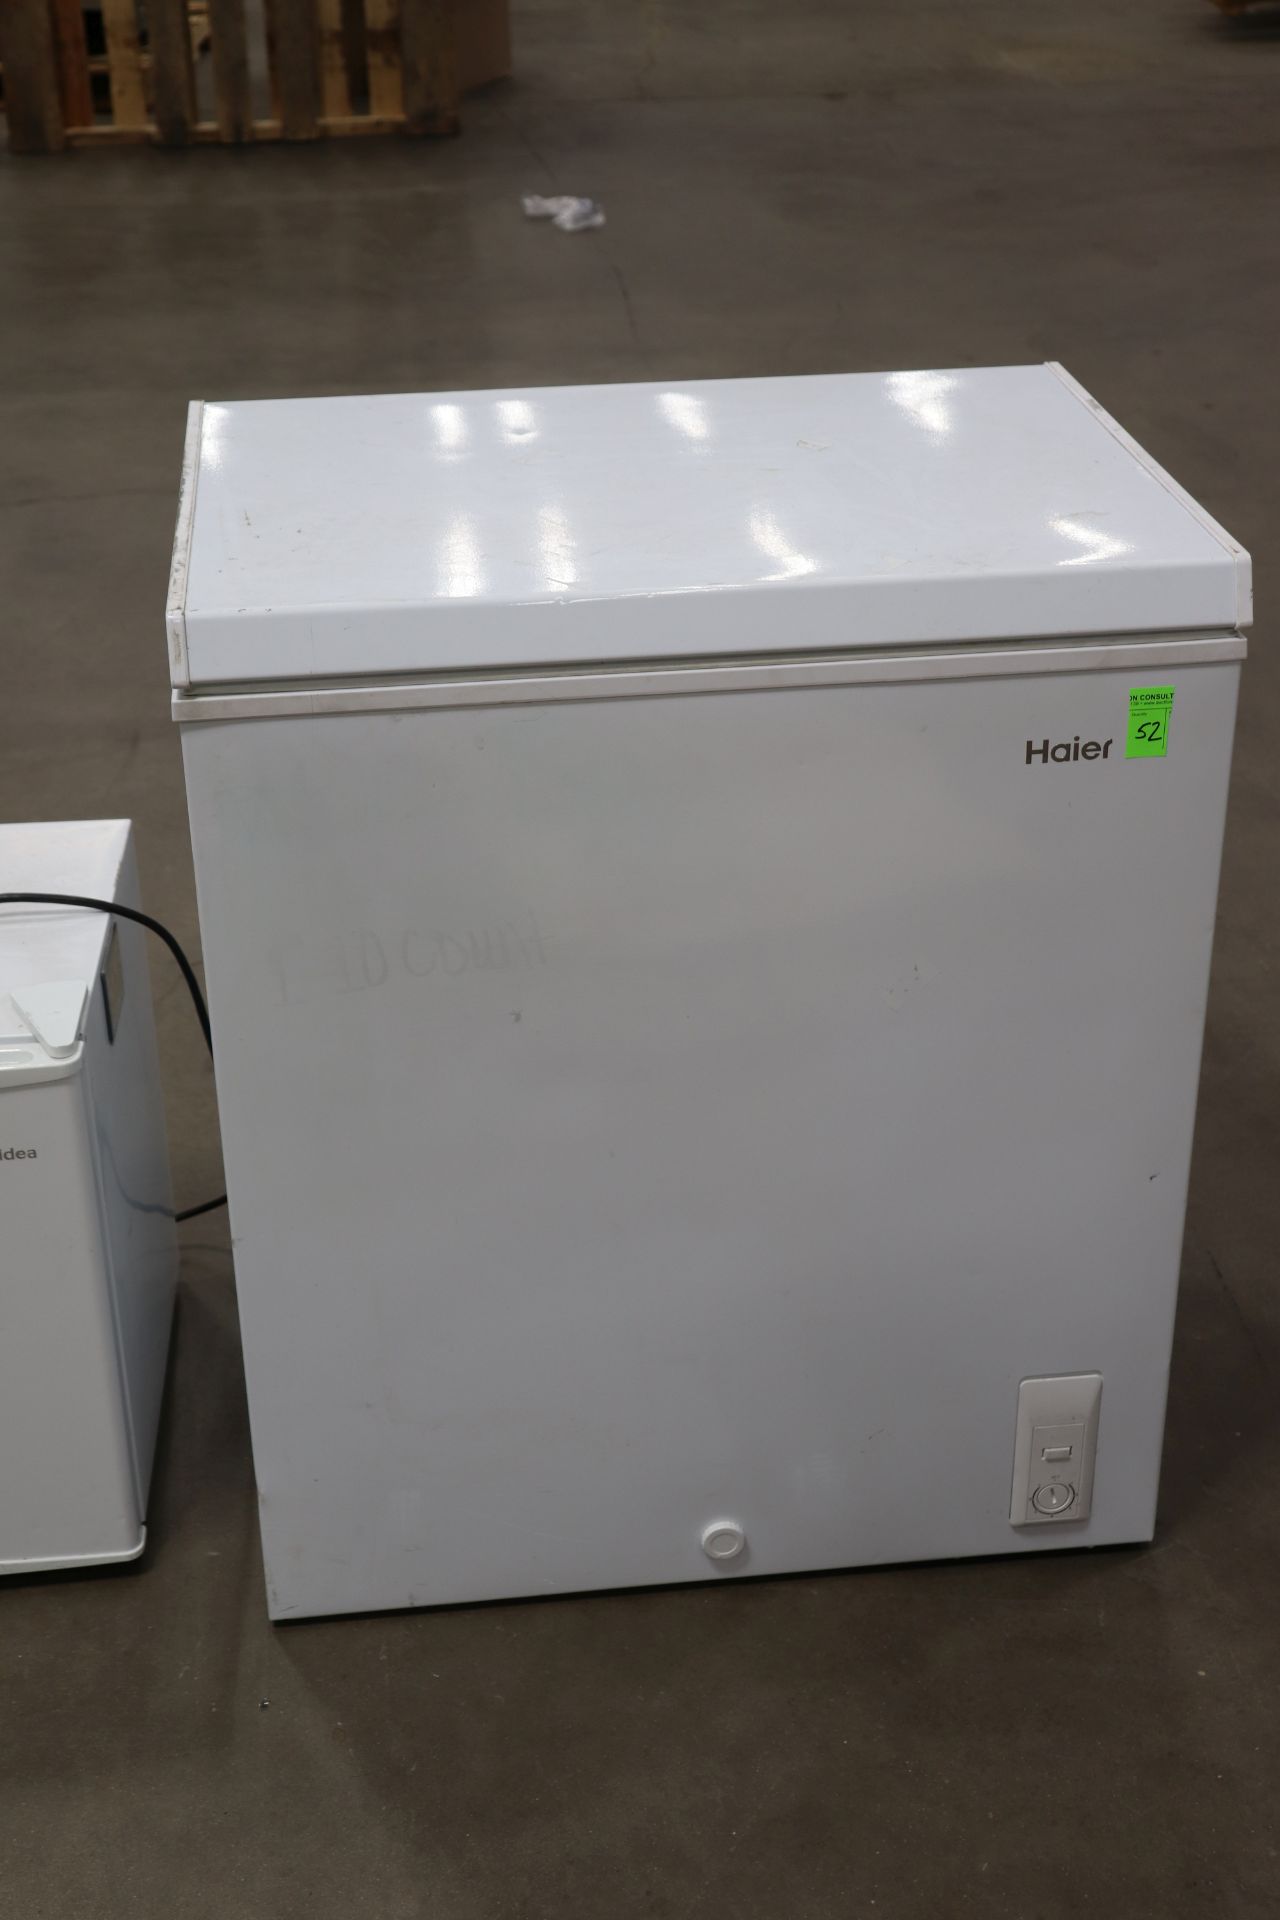 Haier Chest Freezer, 5 cubit foot capacity, Model HF50CM23NW, Serial B30FMDE5600BQG9T0366, 28" x 22